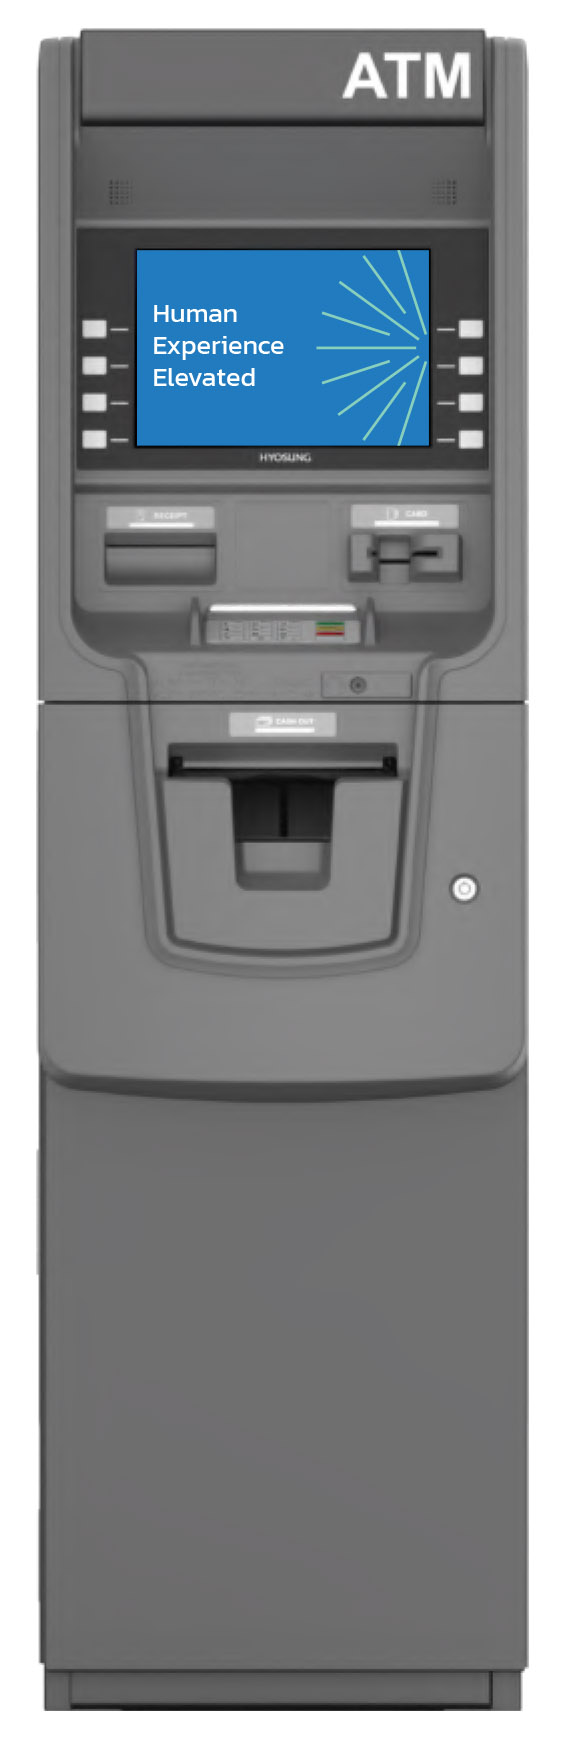 MX5200SE ATM by Hyosung Innovue - Lieberman Companies